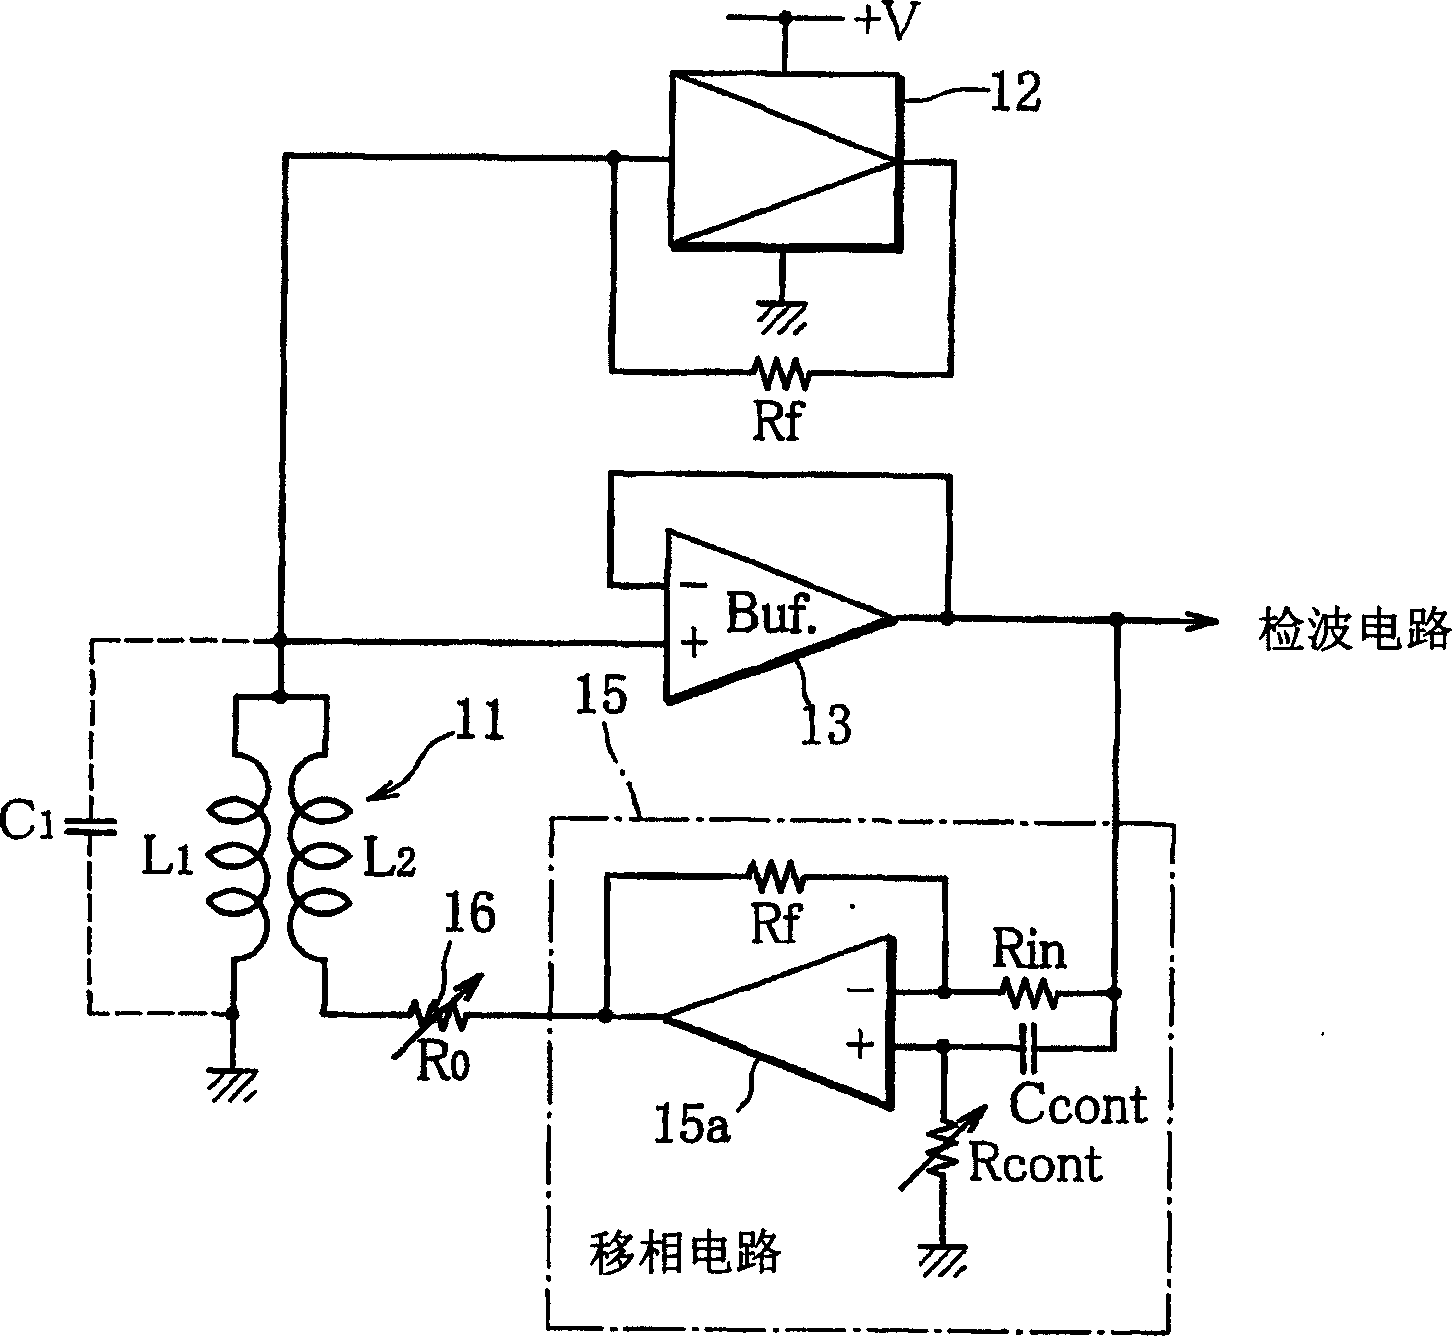 High frequency oscillation type proimity sensor